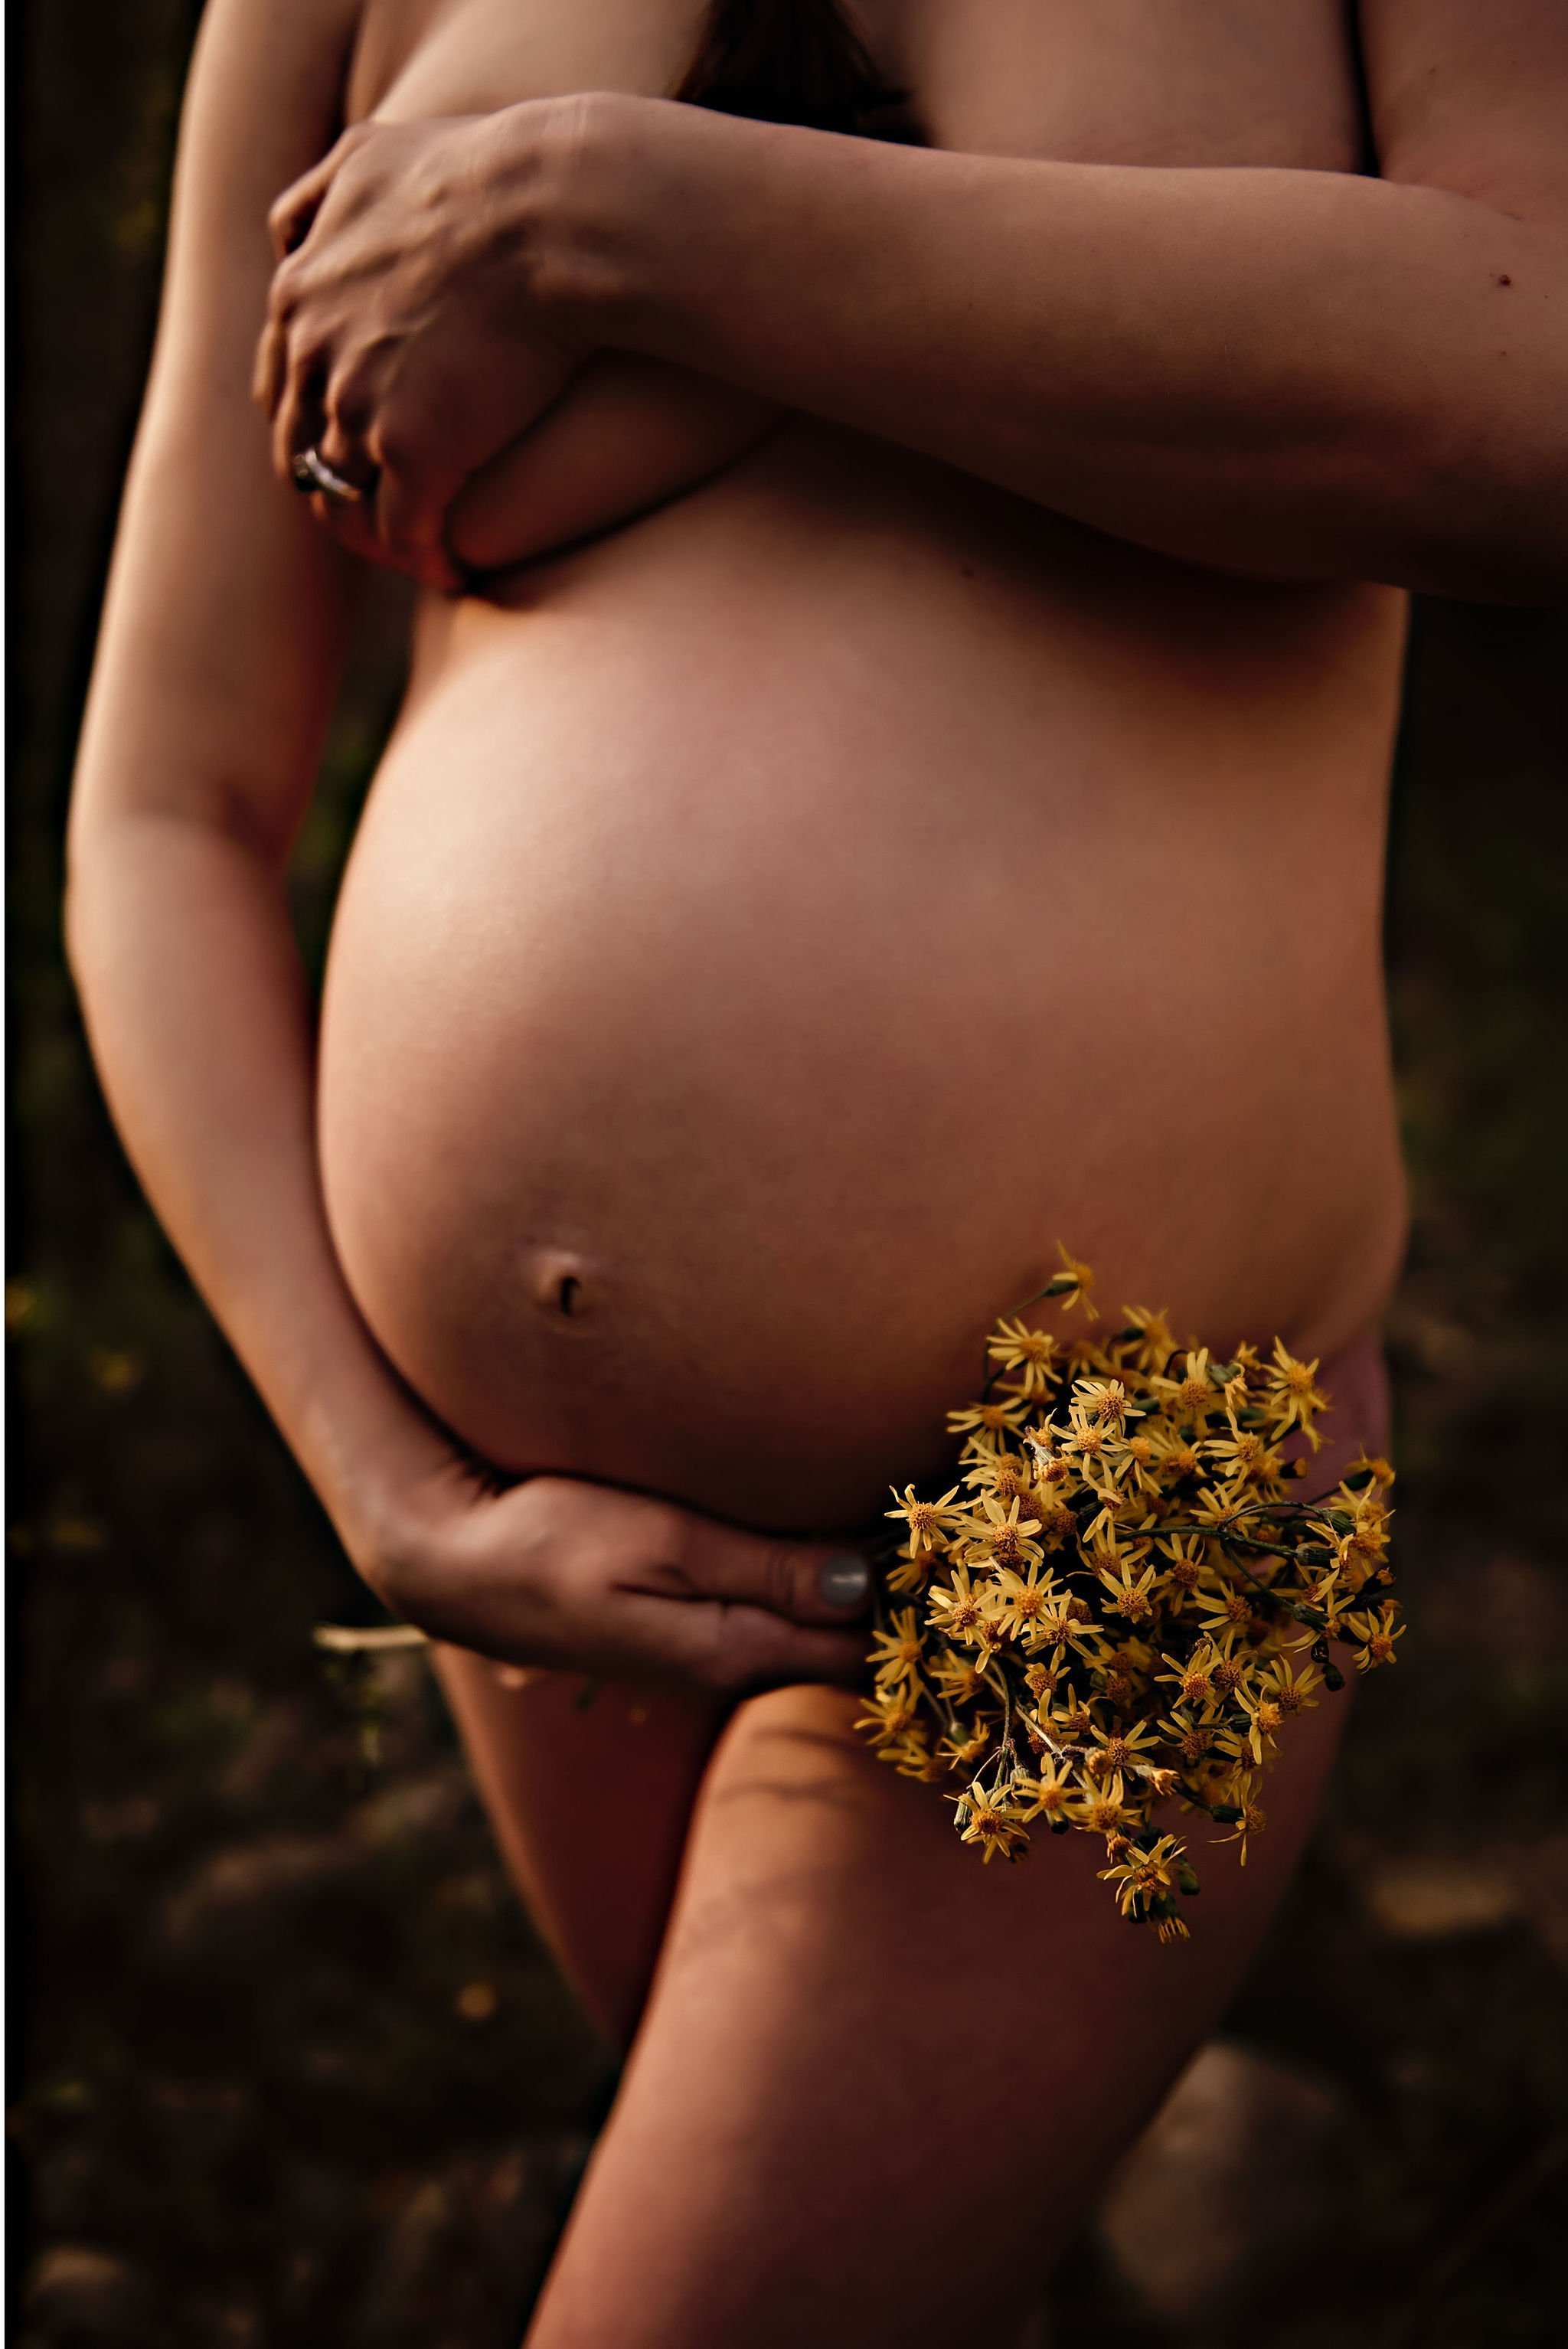 akron-maternity-session-boudoir-nude-photographer-lauren-grayson-13.jpeg